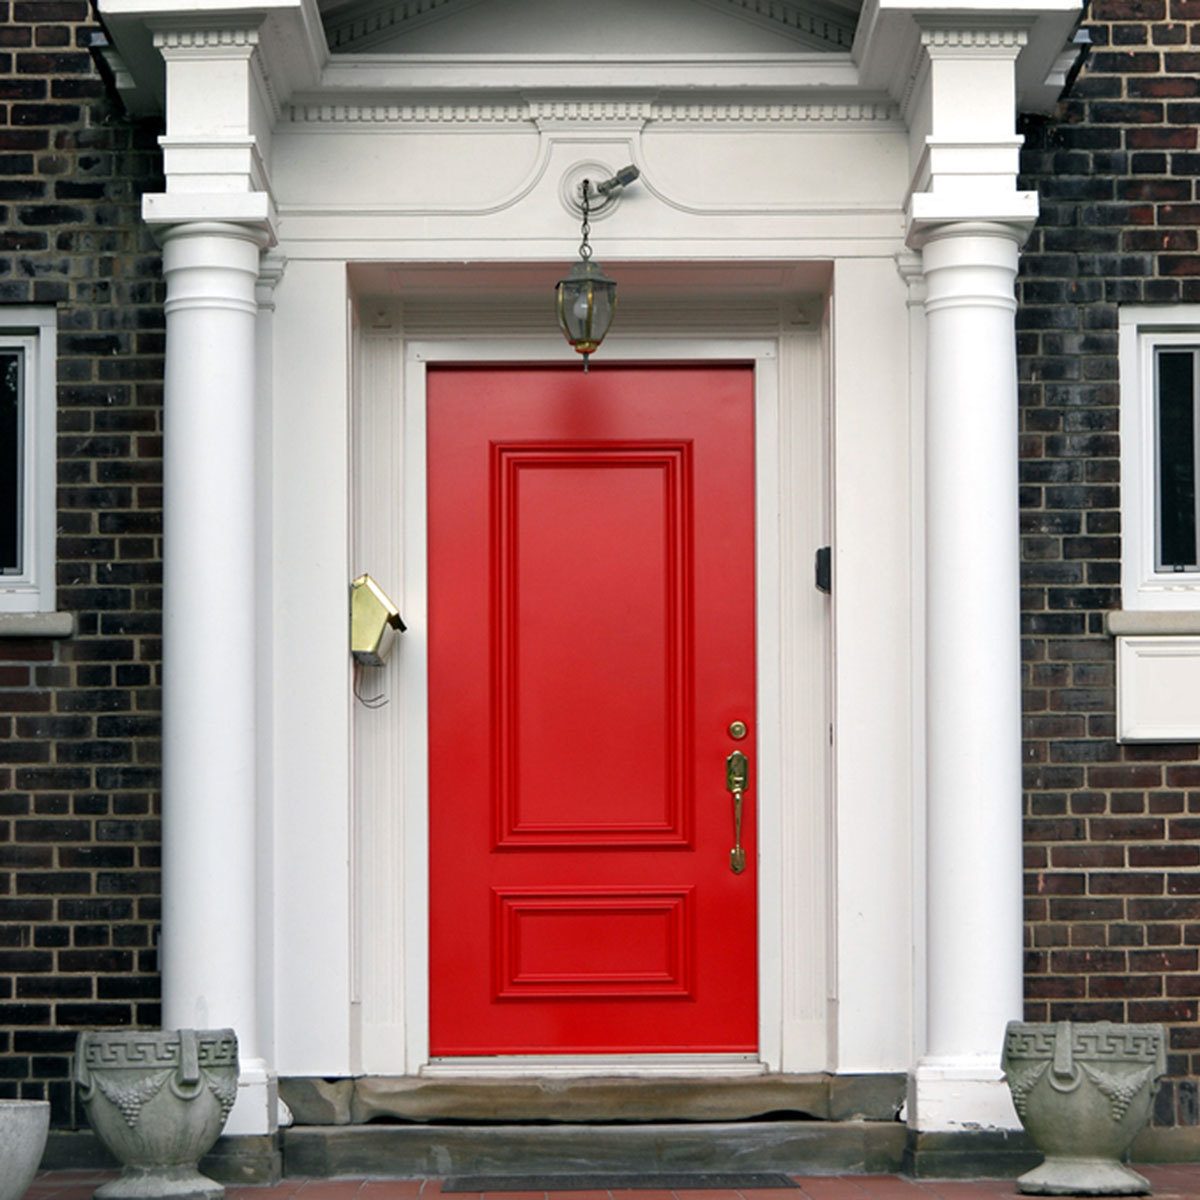 15 Stunning Front Doors — The Family Handyman